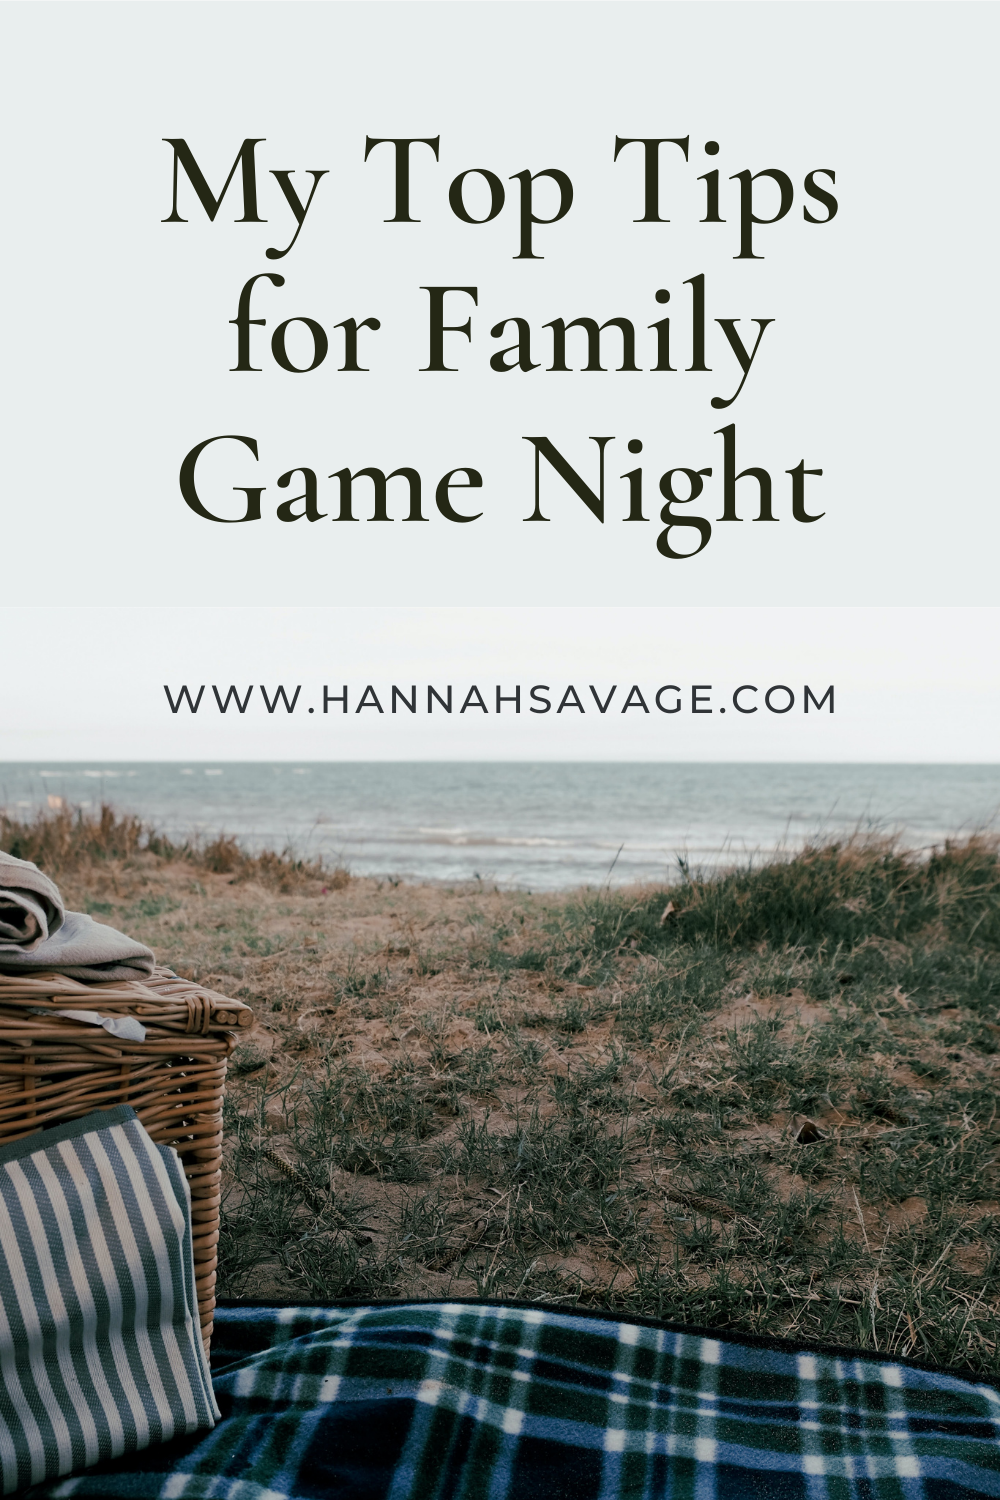 Bringing Back Family Game Night, Parenting…